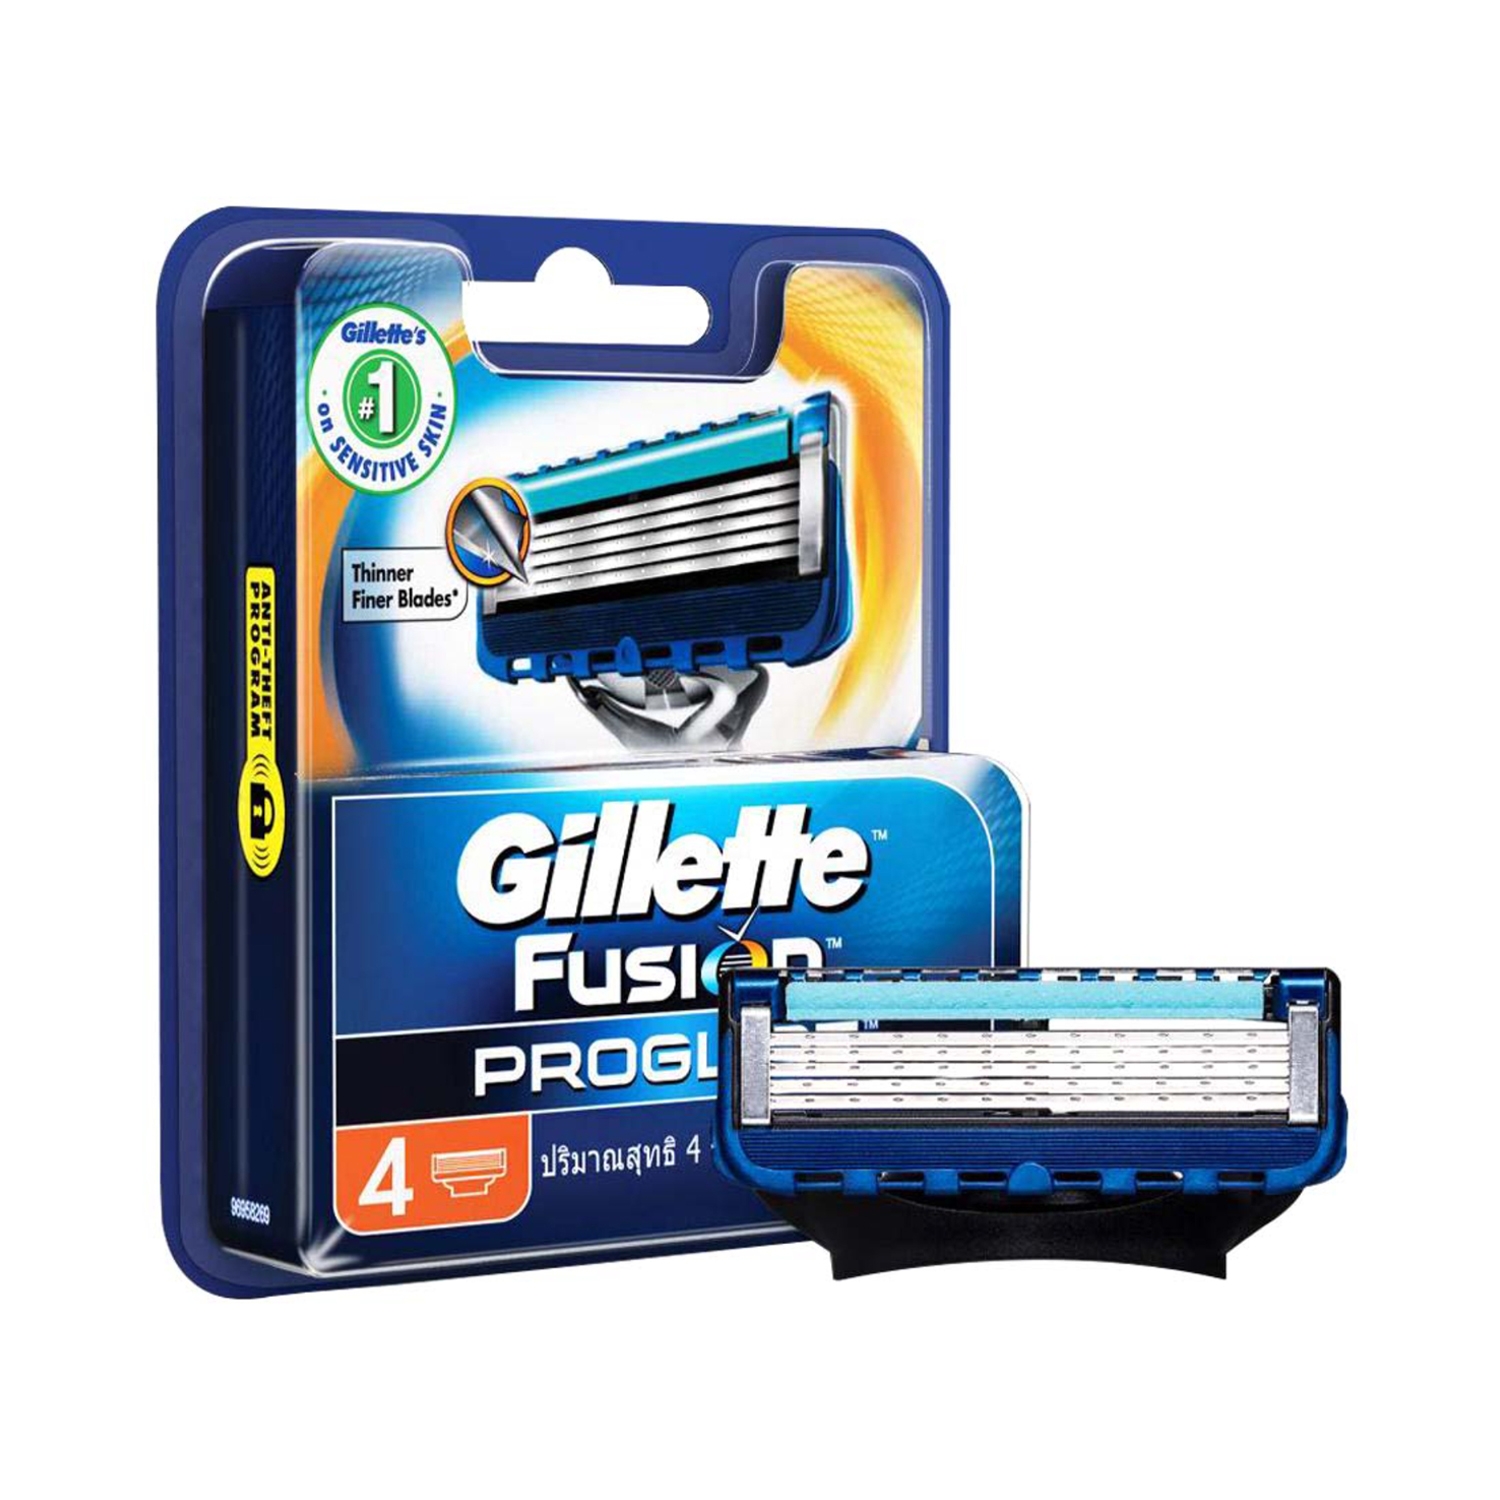 Gillette Fusion Proglide Flexball Manual Shaving Razor Blades Cartridge 4pcs